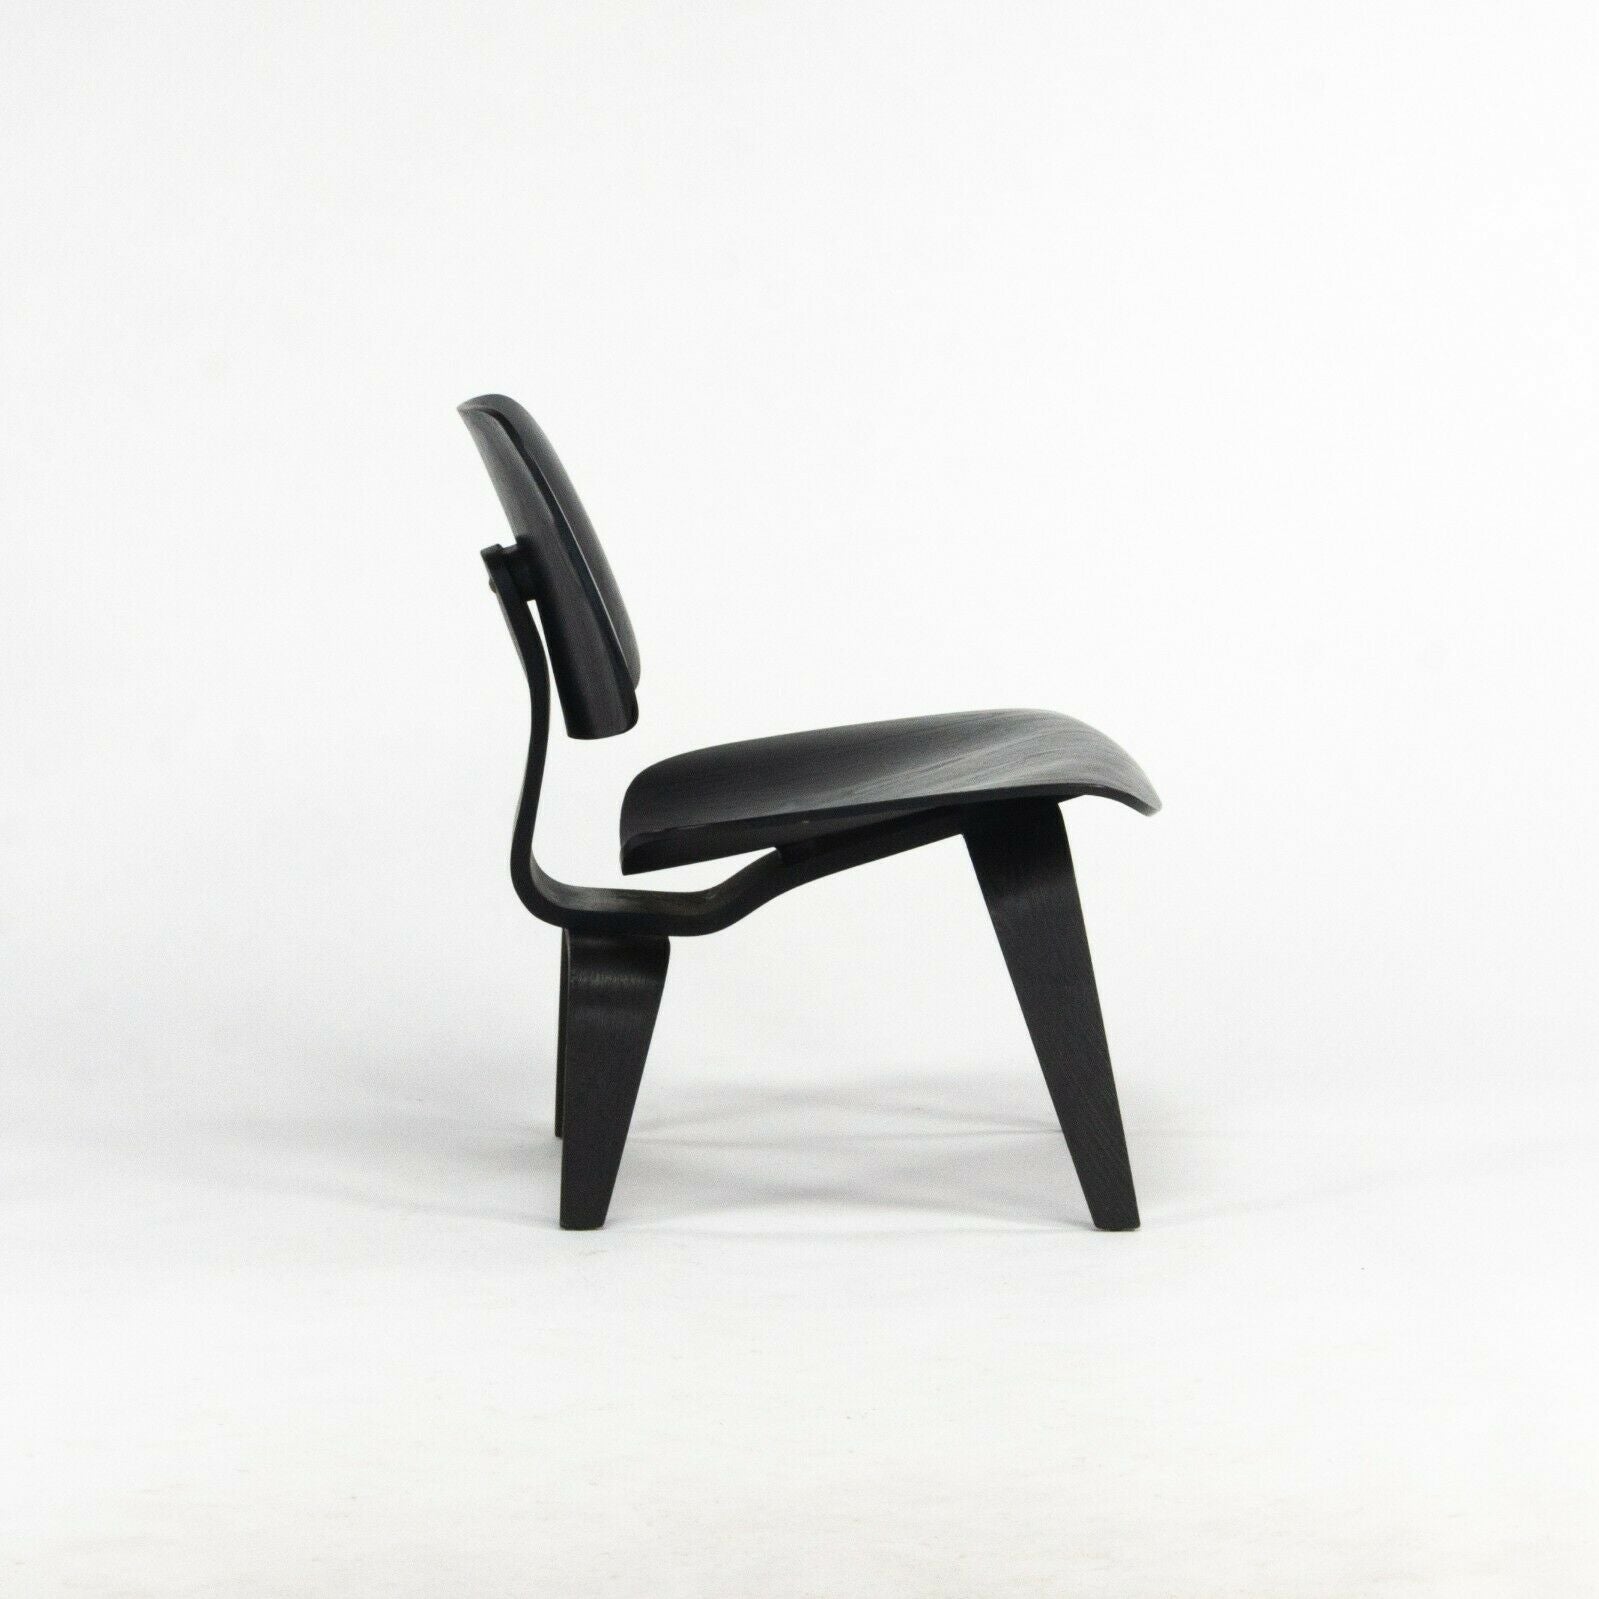 SOLD 1952 Herman Miller Eames LCW Lounge Chair Wood w/  Ebonized Black Aniline Finish